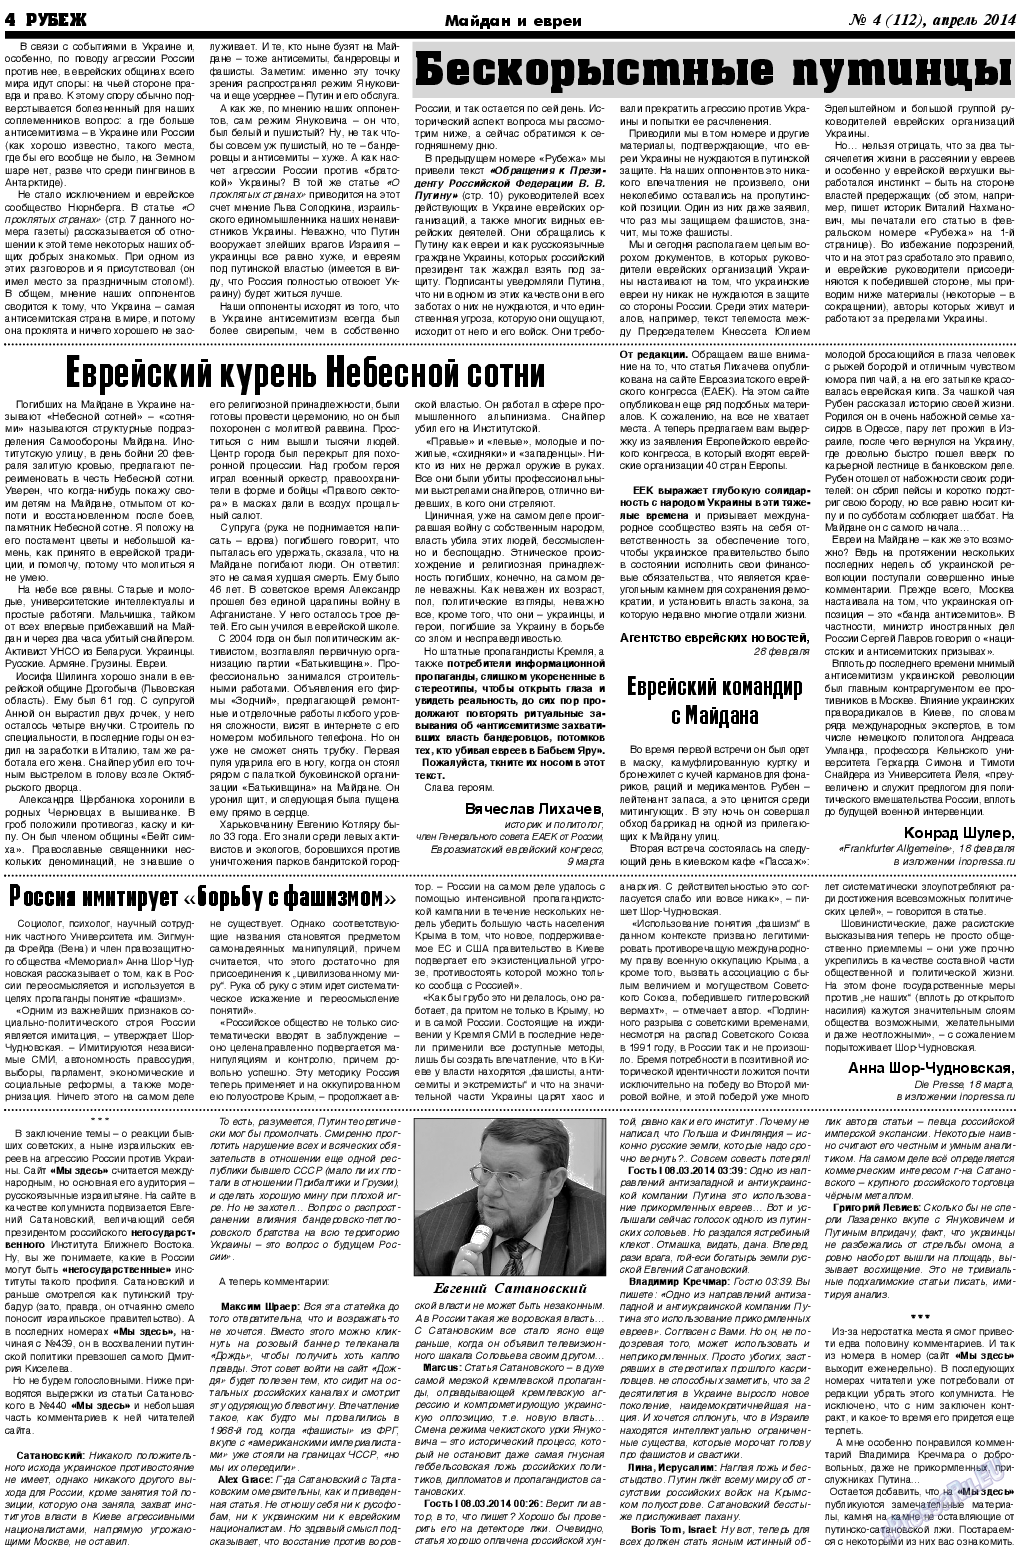 Рубеж, газета. 2014 №4 стр.4